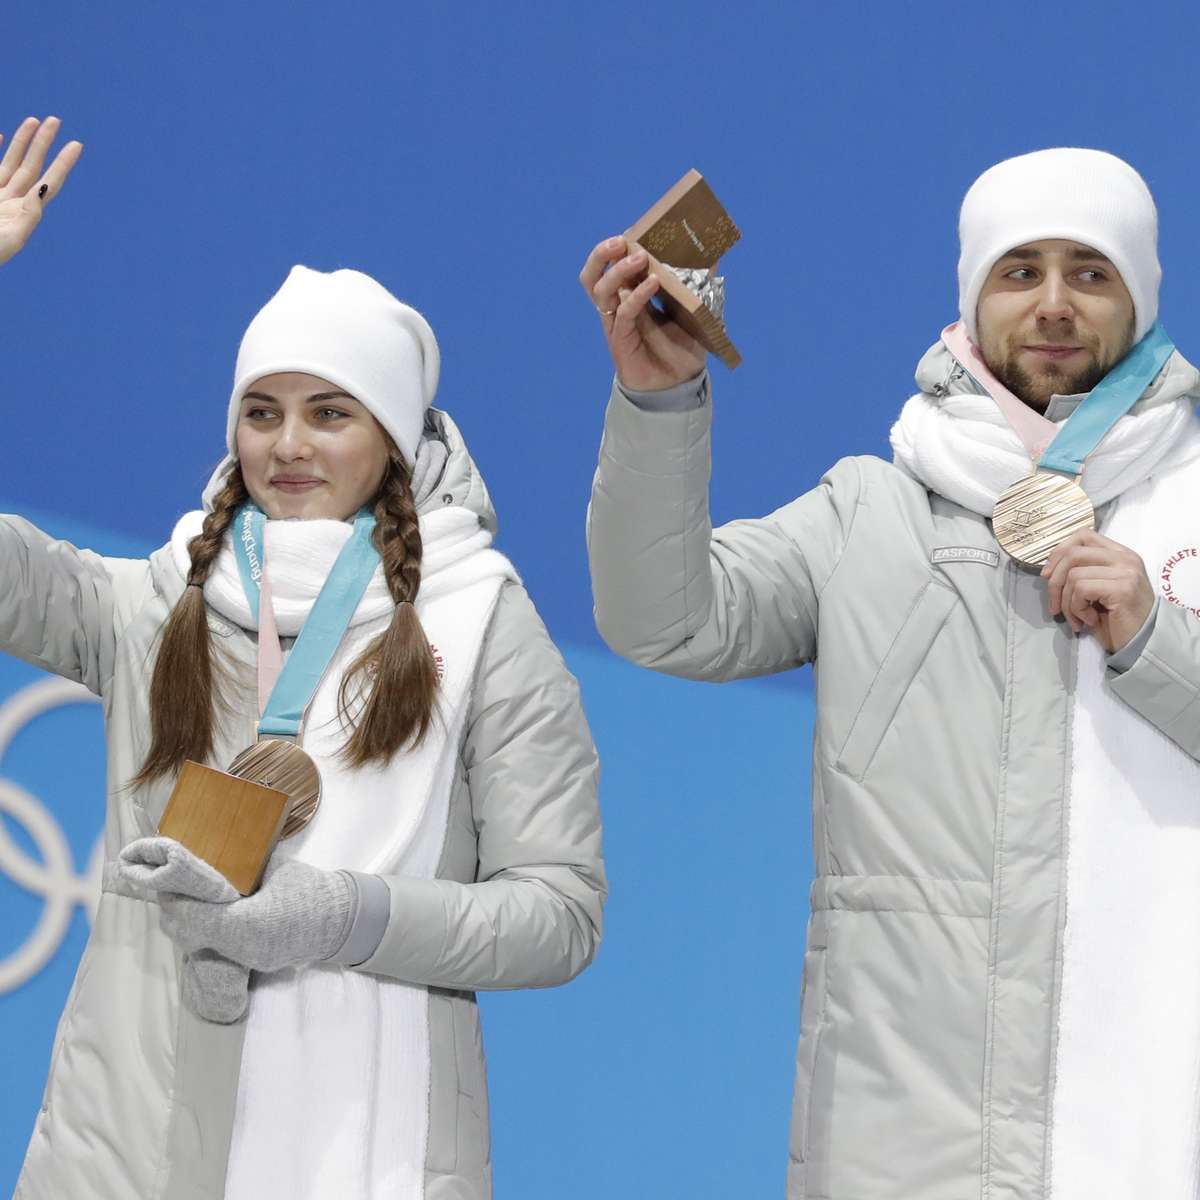 Doping tira da Rússia título das Olimpíadas de Inverno de 2014 - ESPN